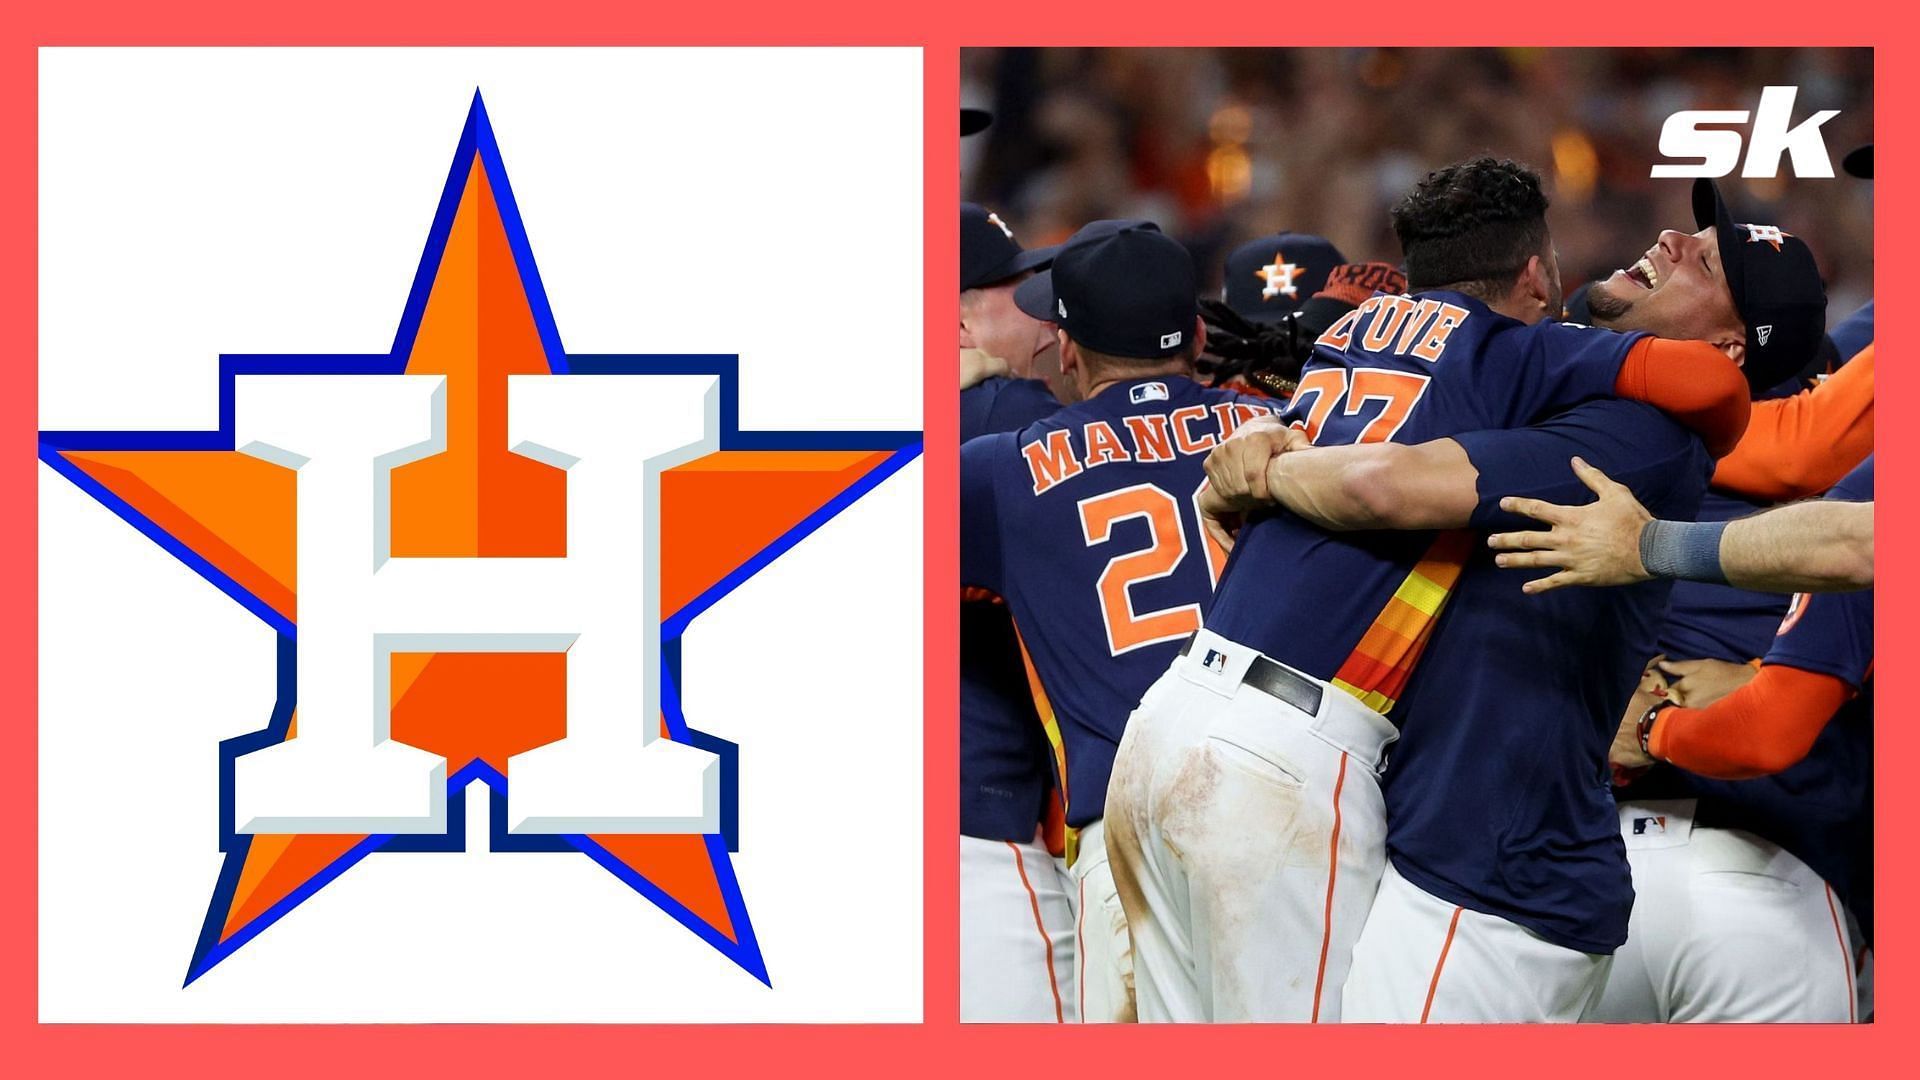 Official Houston Astros Website  MLBcom